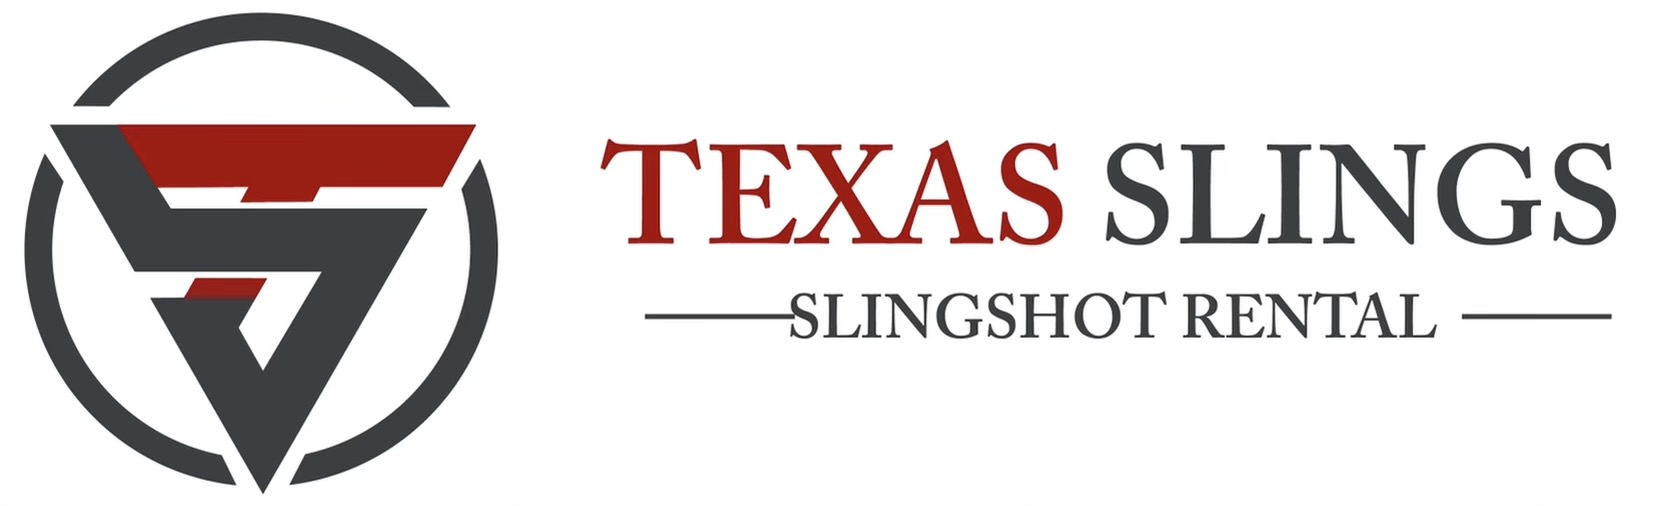 Texas Slings Logo for Polaris Slingshot Rentals